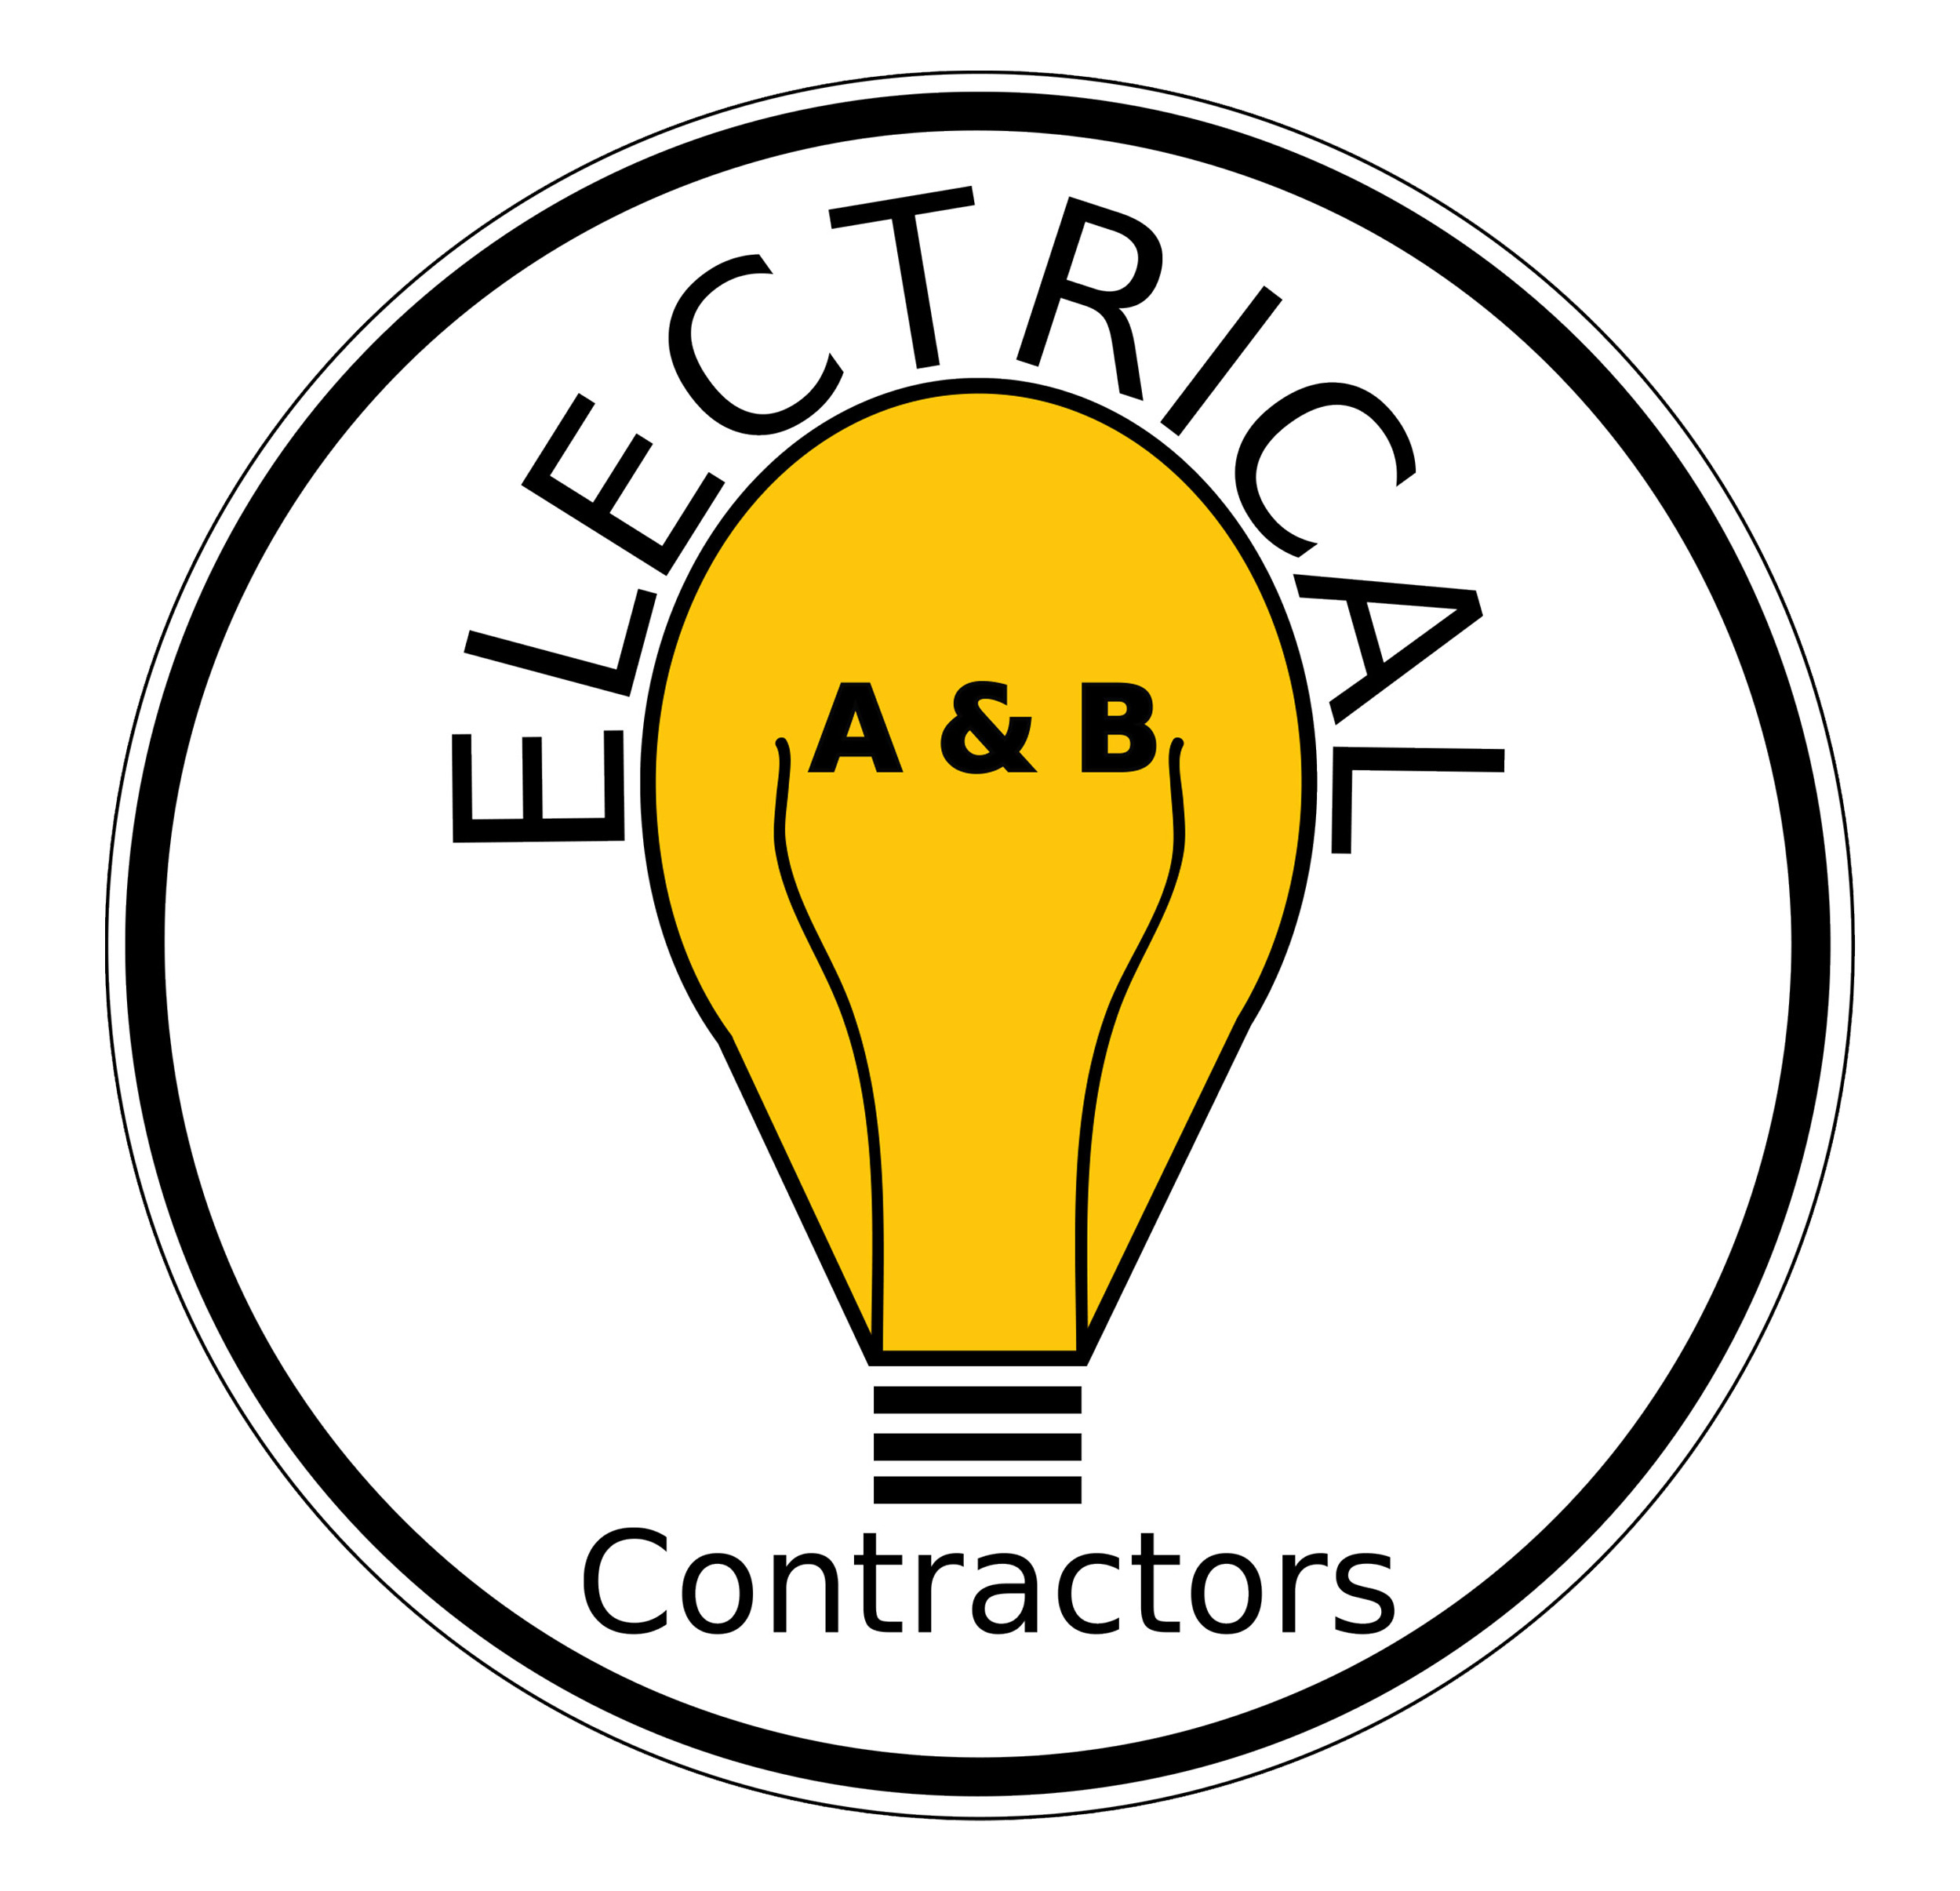 Electricians in Essex